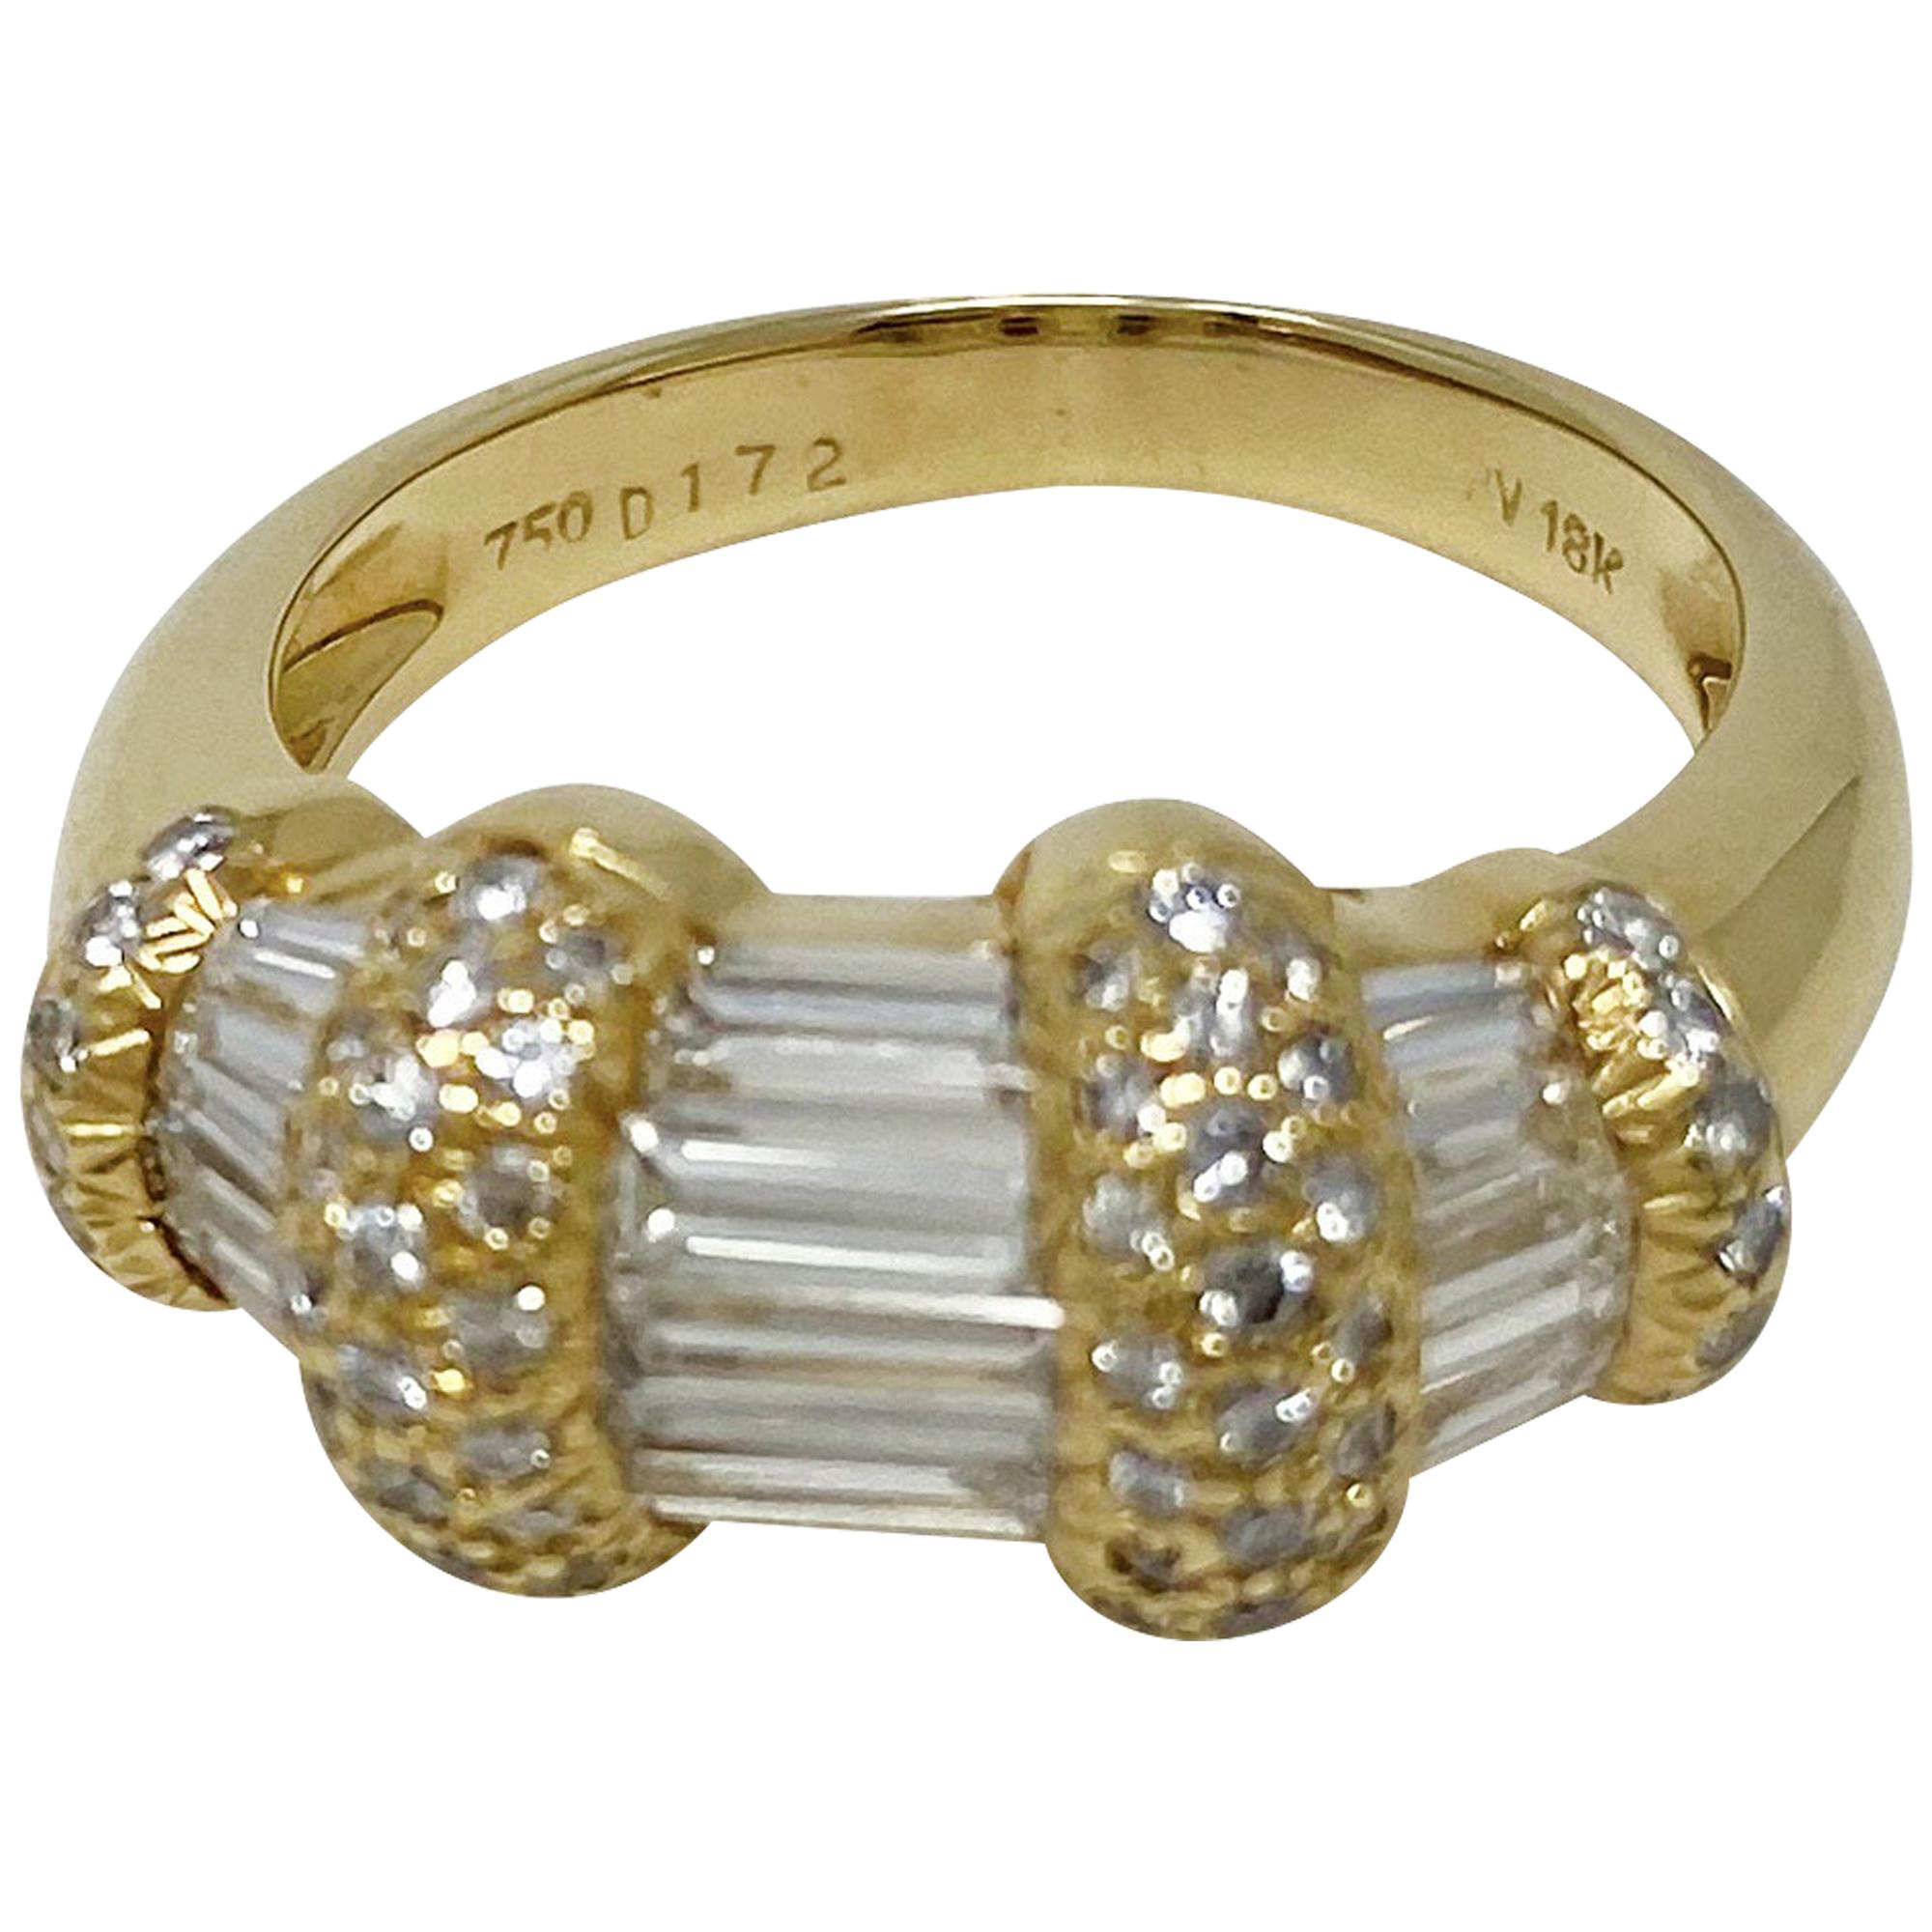 18 Karat Yellow Gold 1.72 Carat Diamond Ring by Ponte Vecchio